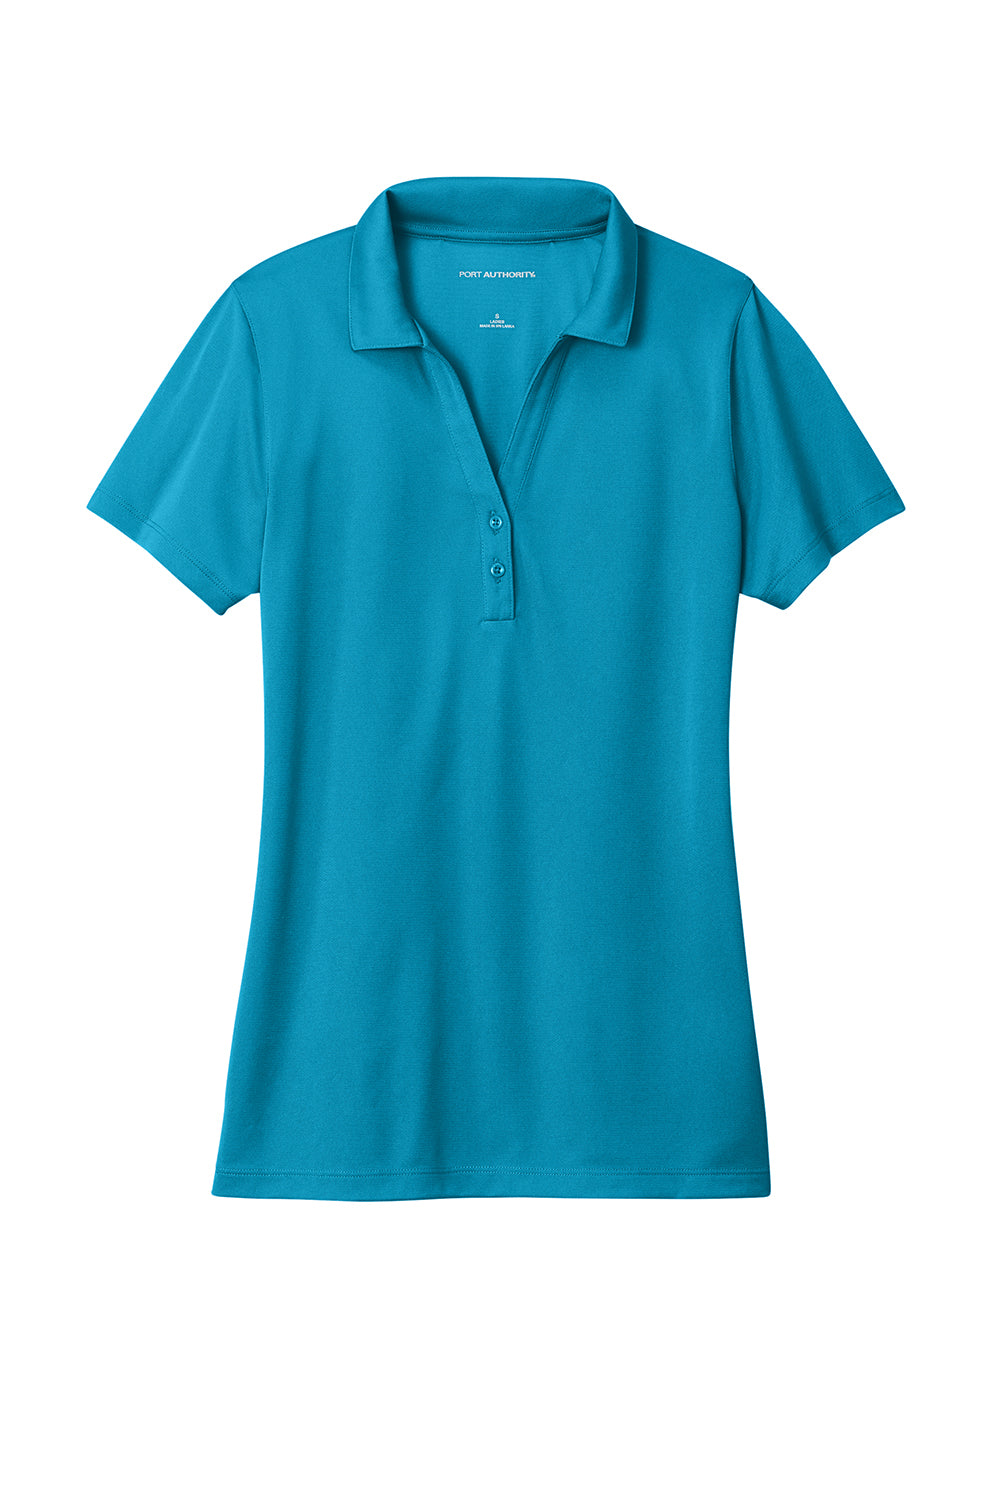 Port Authority LK863 Womens C-Free Performance Moisture Wicking Short Sleeve Polo Shirt Parcel Blue Flat Front